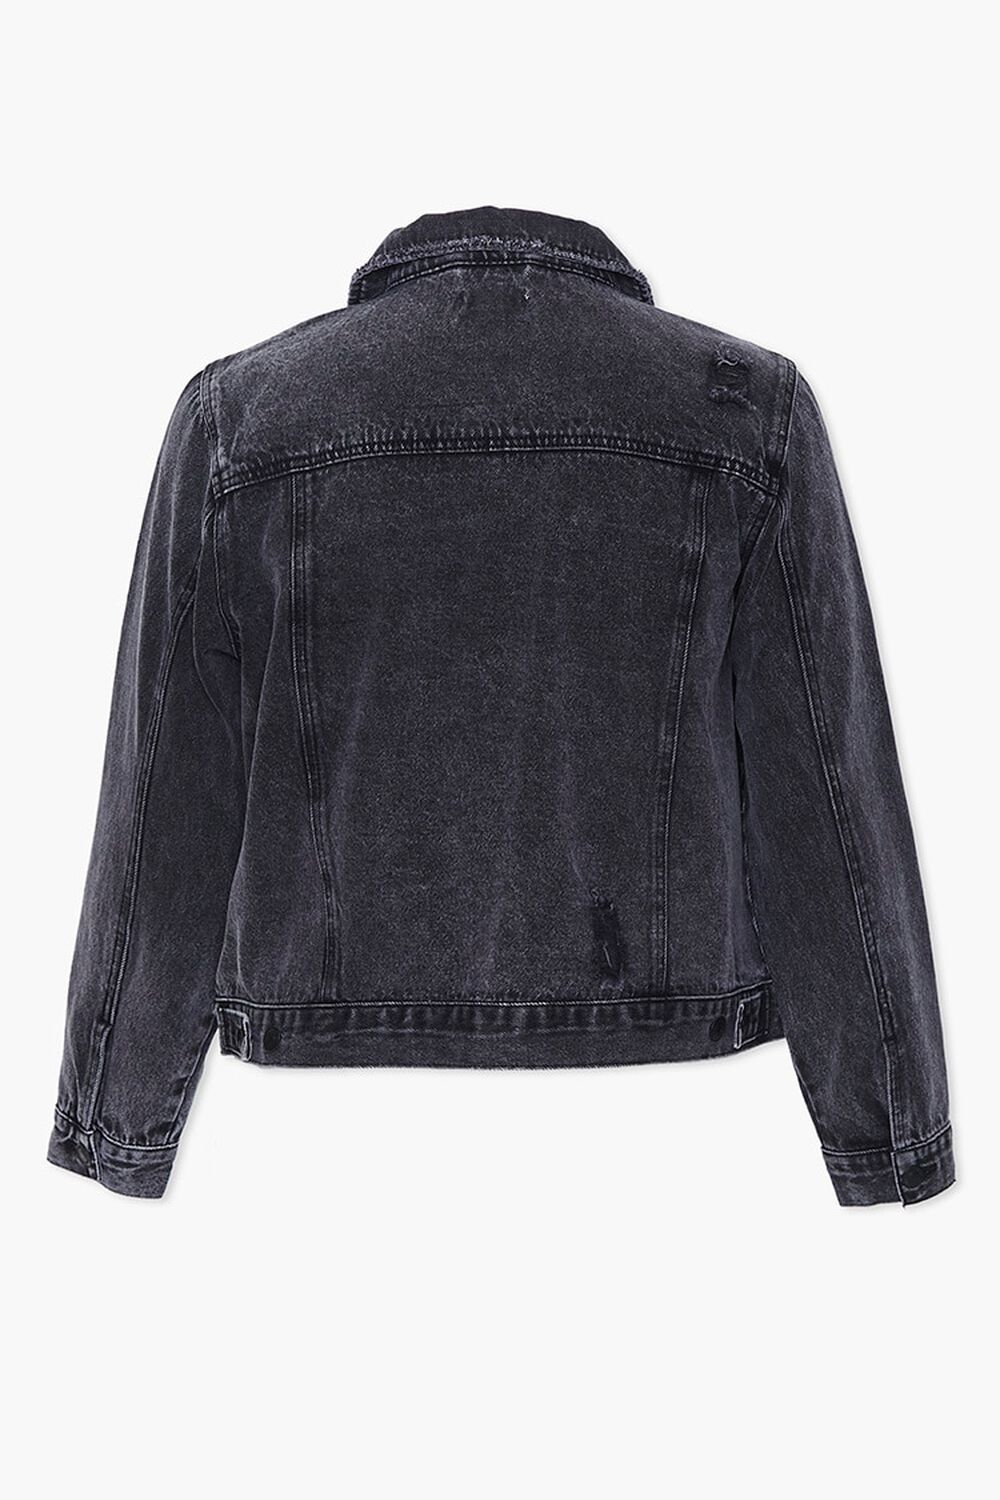 BLACK Plus Size Distressed Denim Jacket, image 3